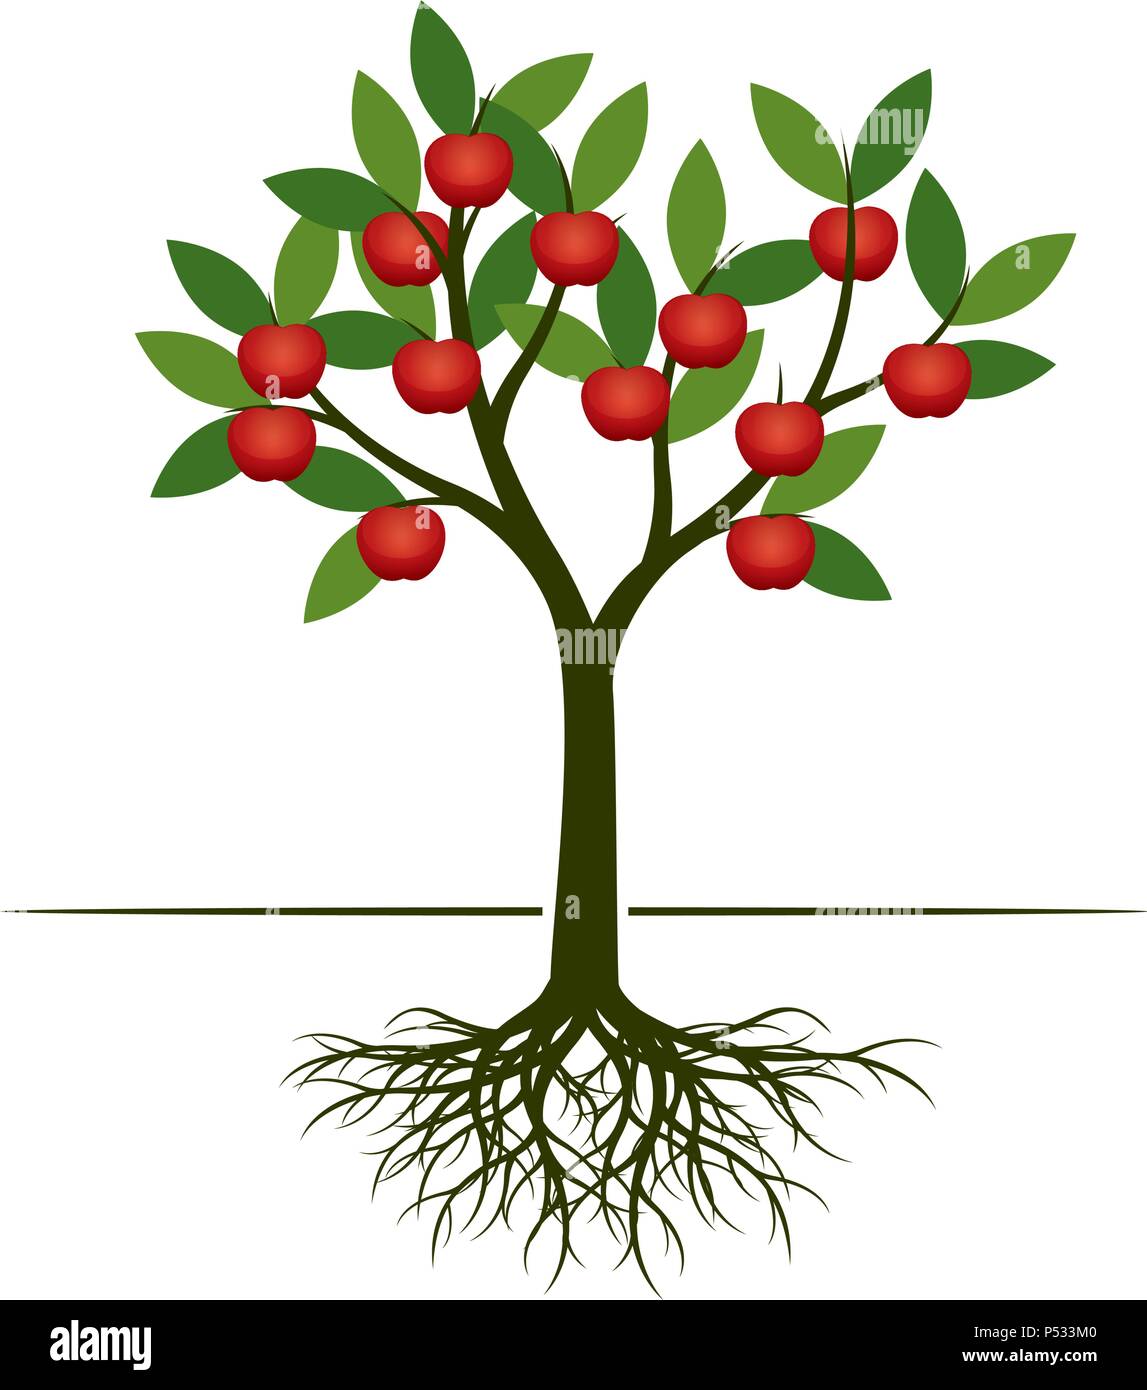 Grüner Apfel Baum mit roten Apfel Früchte. Vector Illustration. Stock Vektor